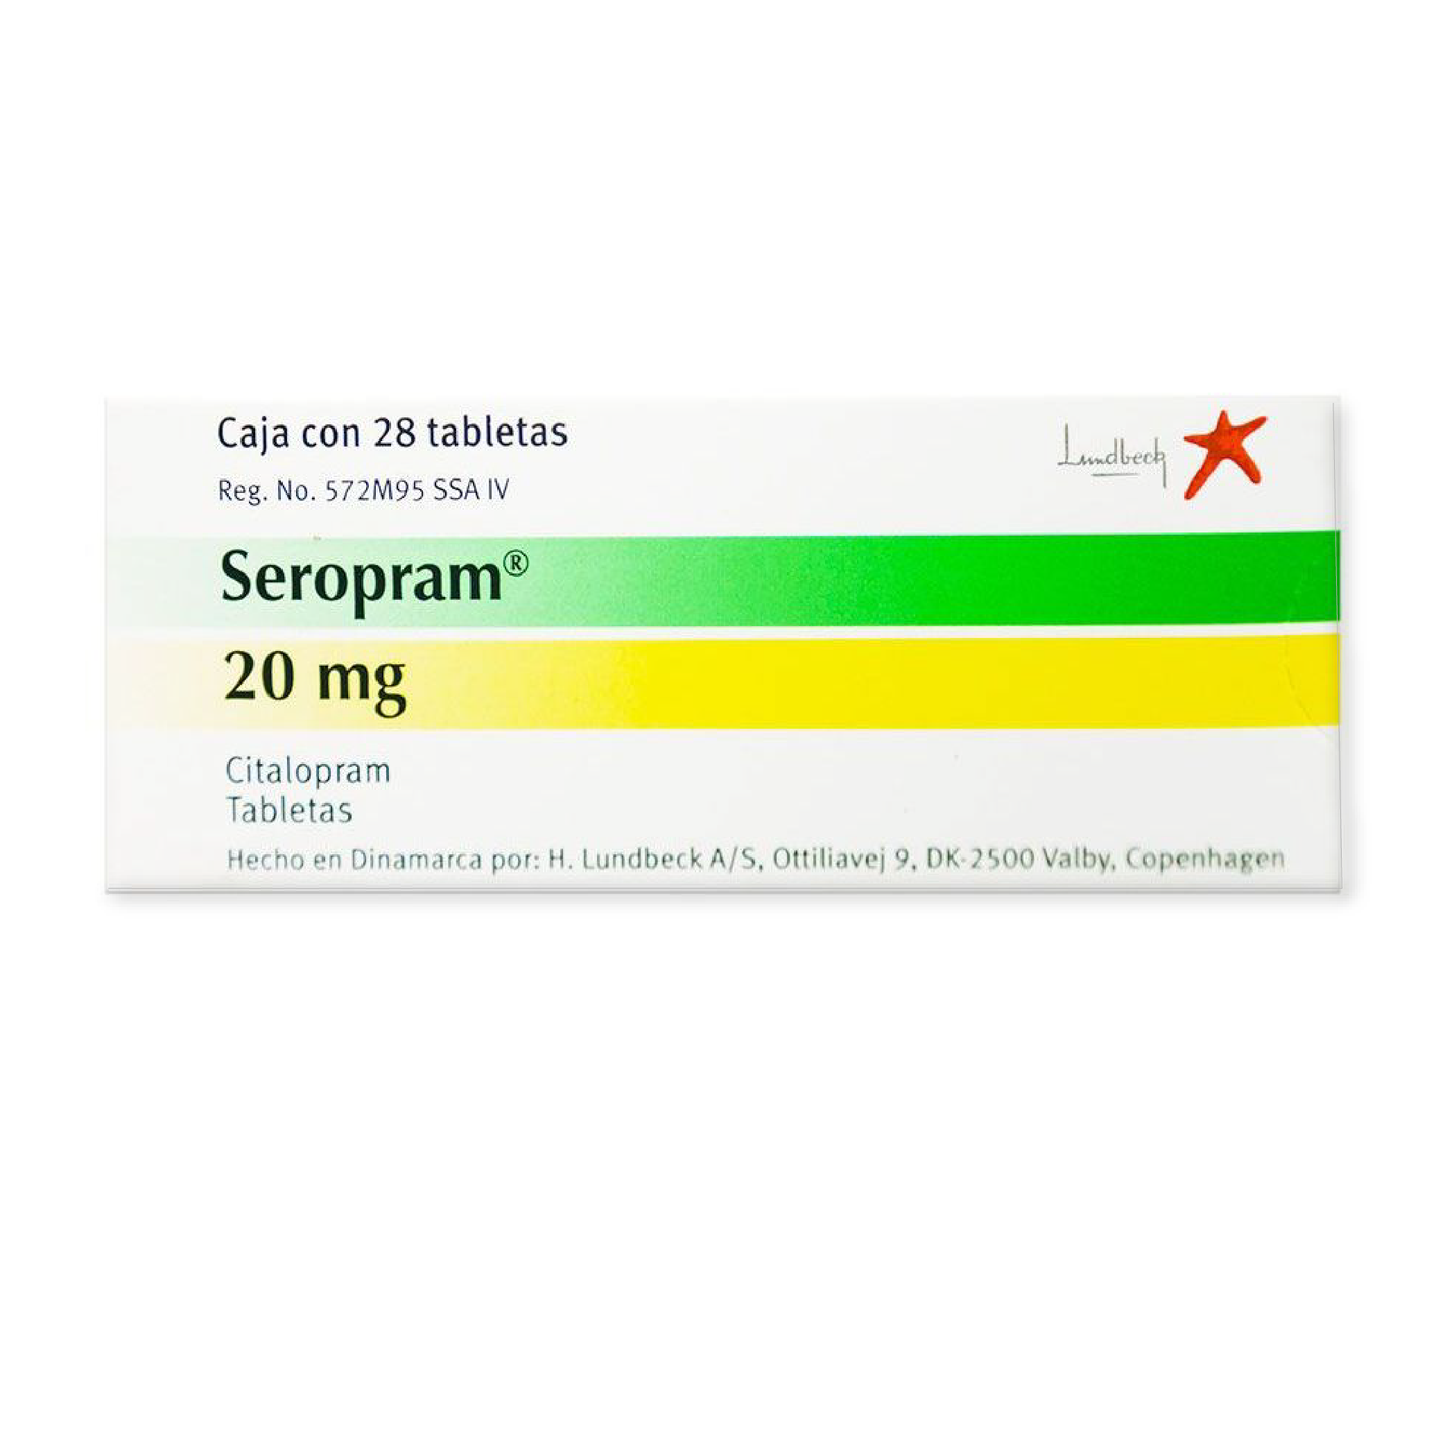 Seropram (Citalopram) Tabs 20 mg Cja c/28 tabs